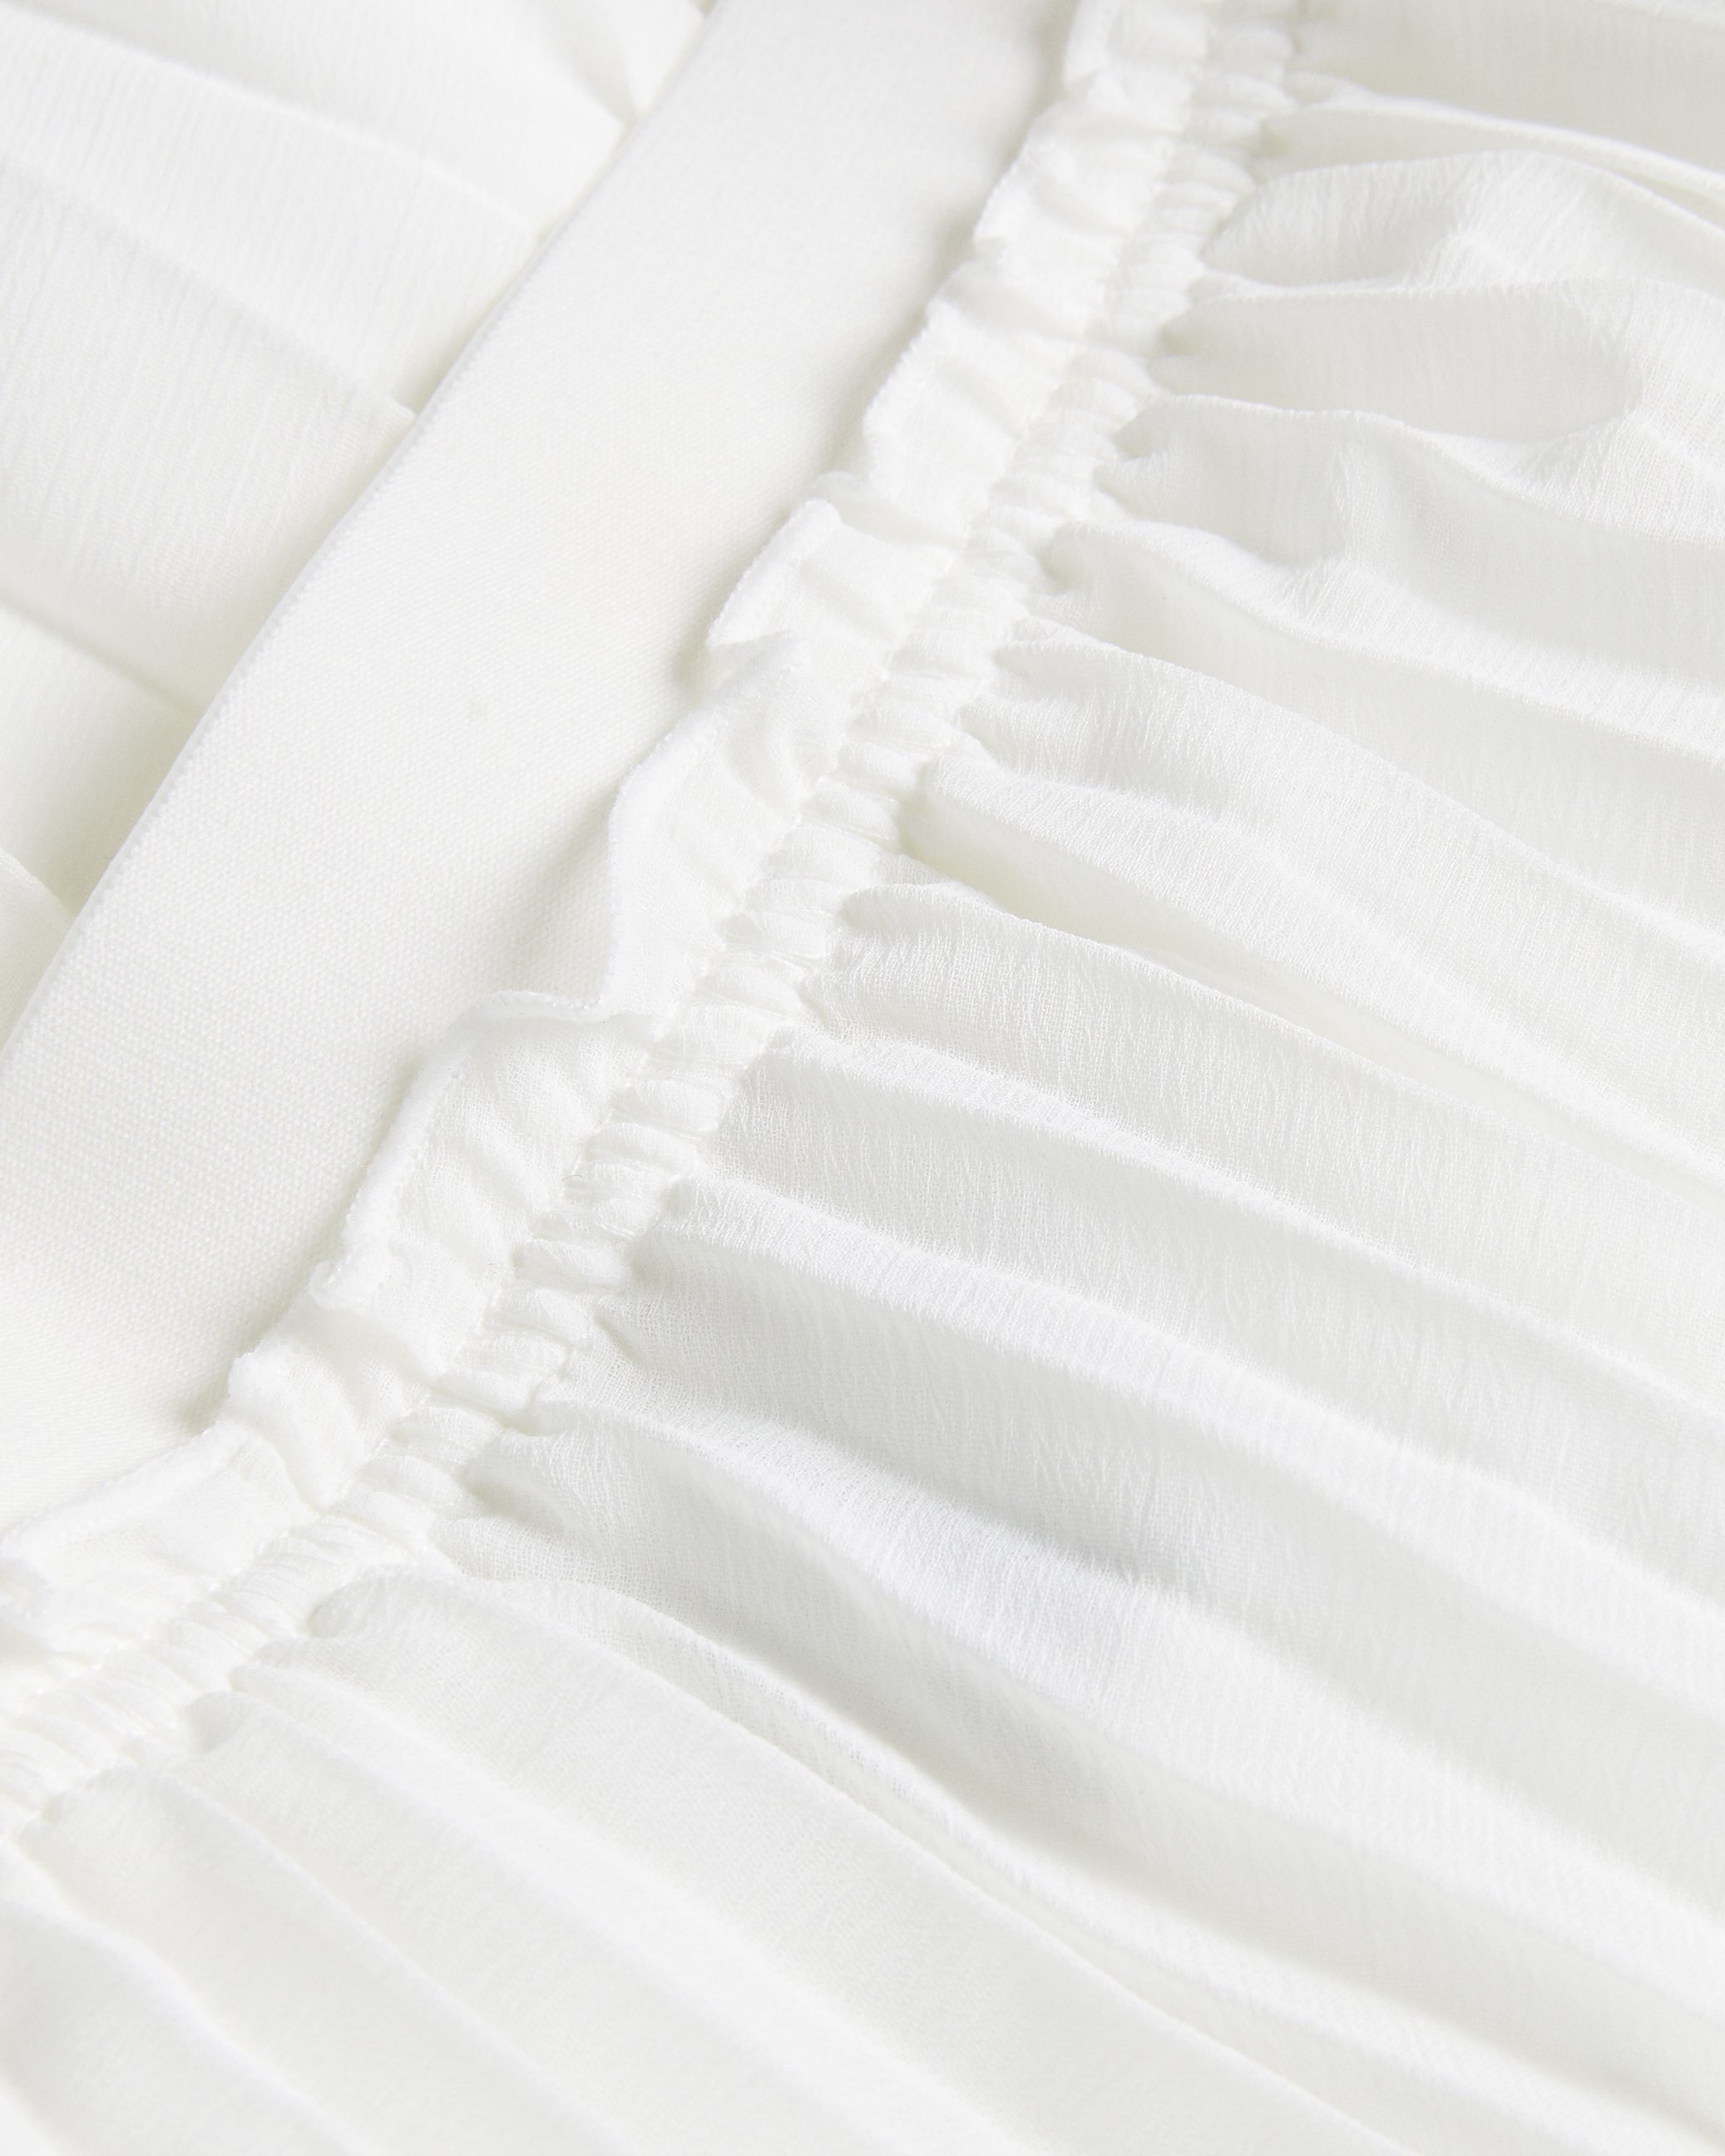 Tambor Pleated Midi Skirt With Elasticate White